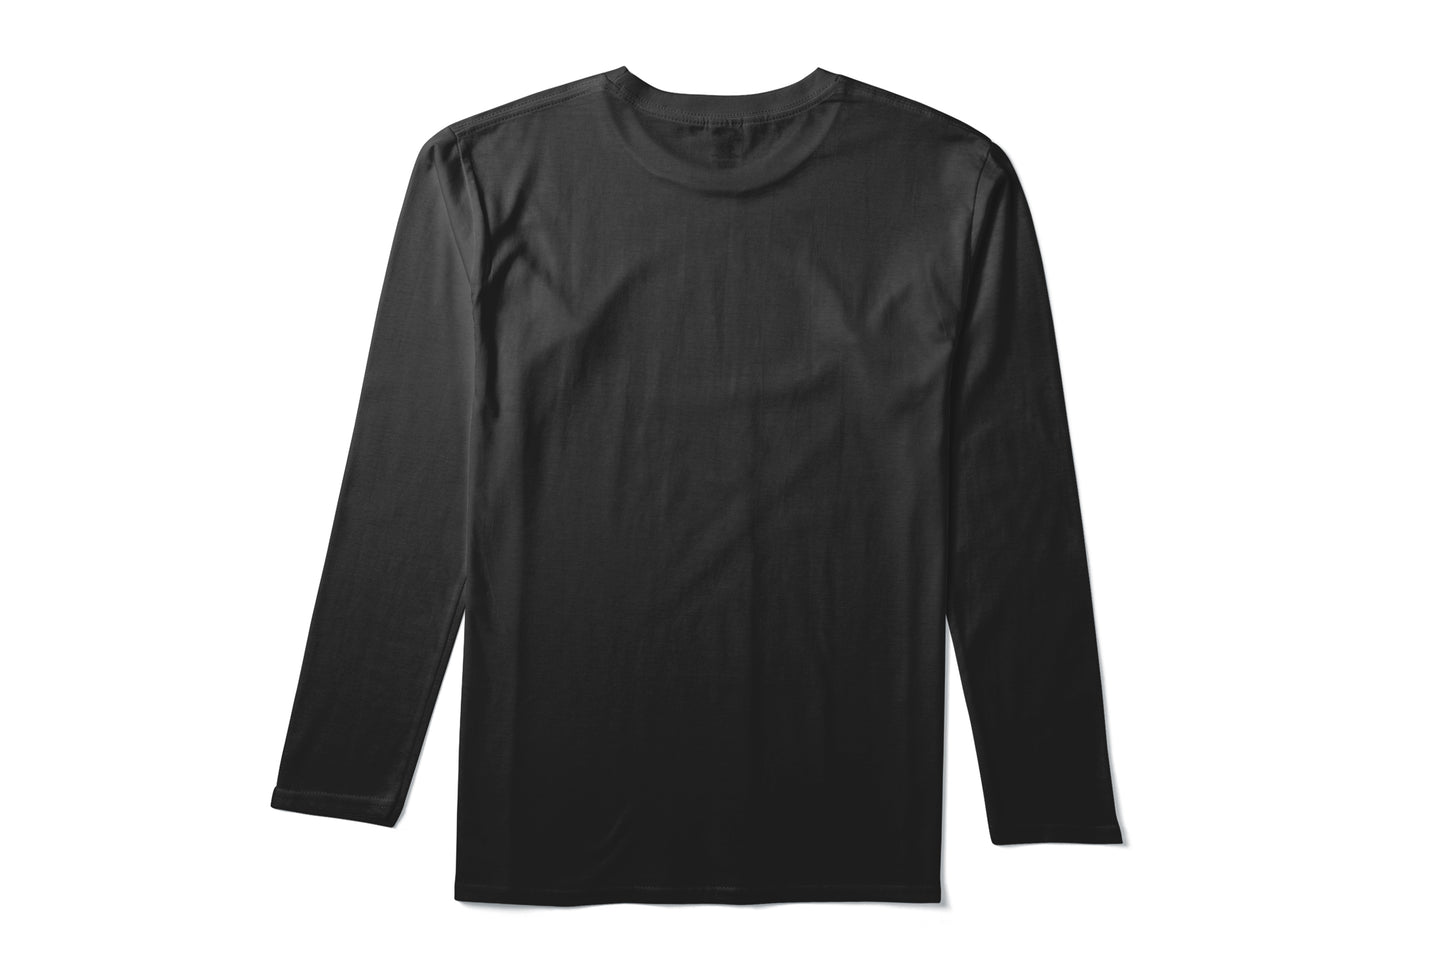 Selfies At Tiffany's Heat Transfer on Black Long Sleeve Shirt